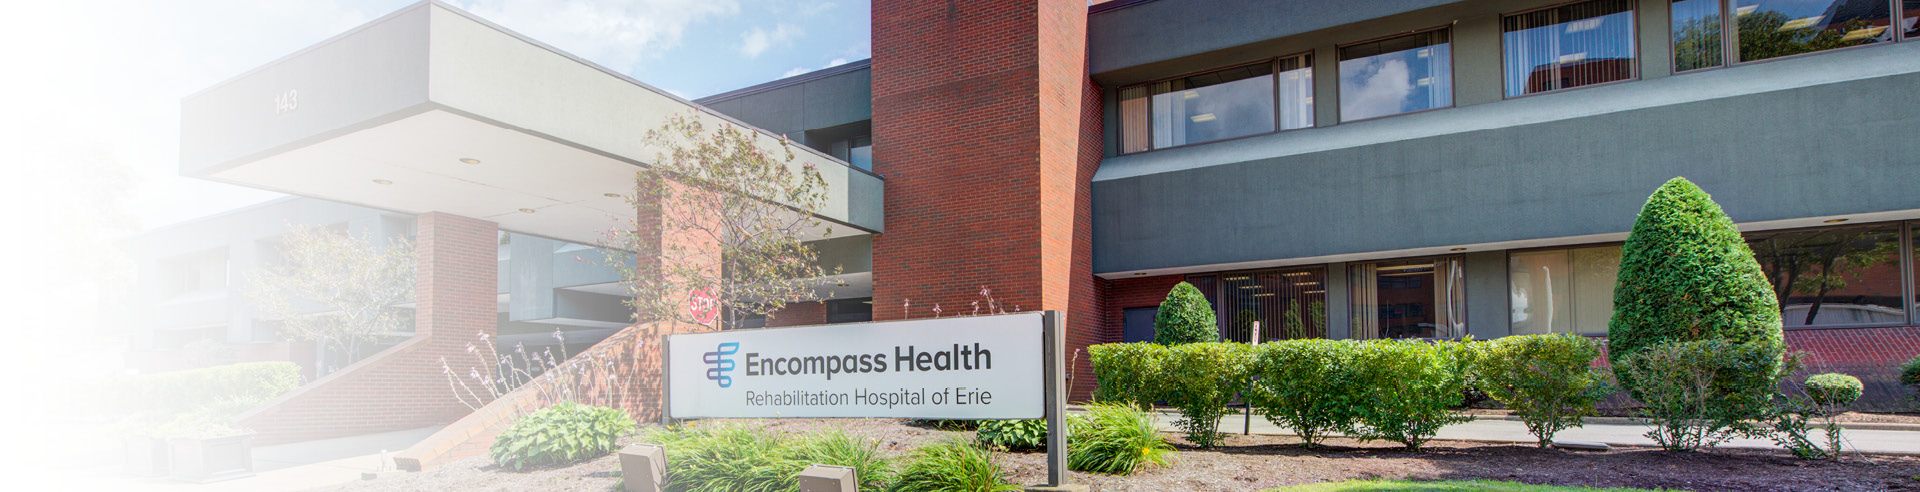 Encompass Health Rehabilitation Hospital of Erie exterior